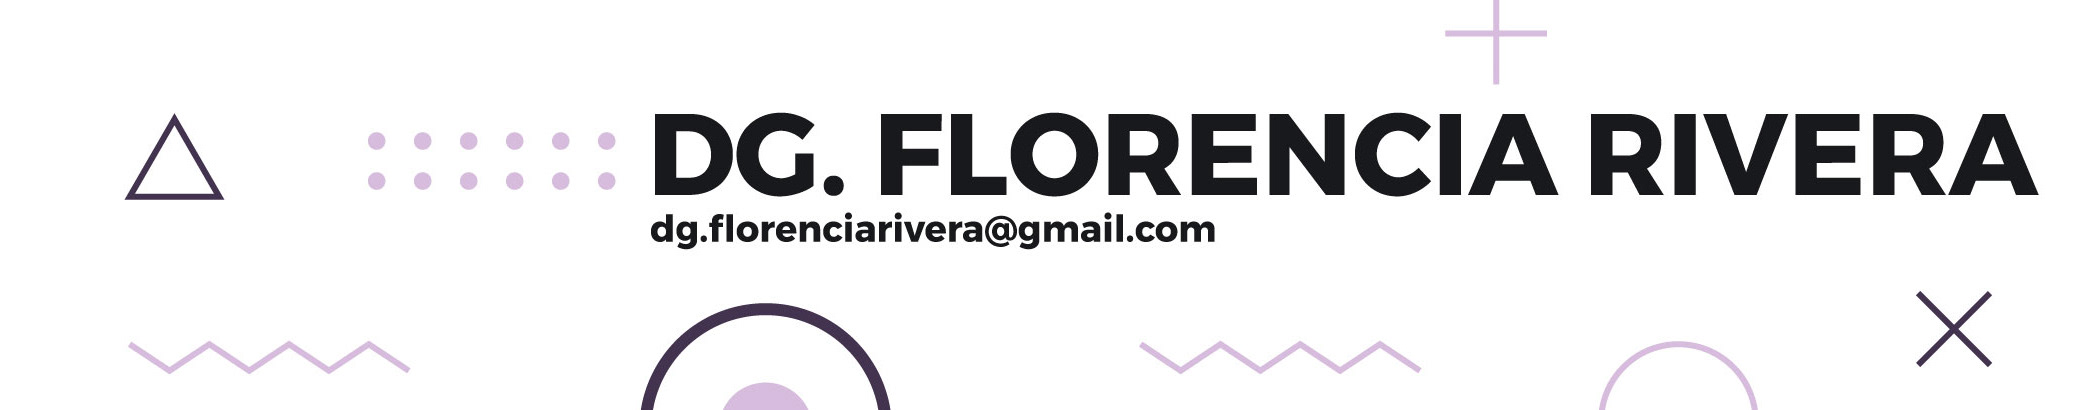 Profielbanner van Florencia Rivera